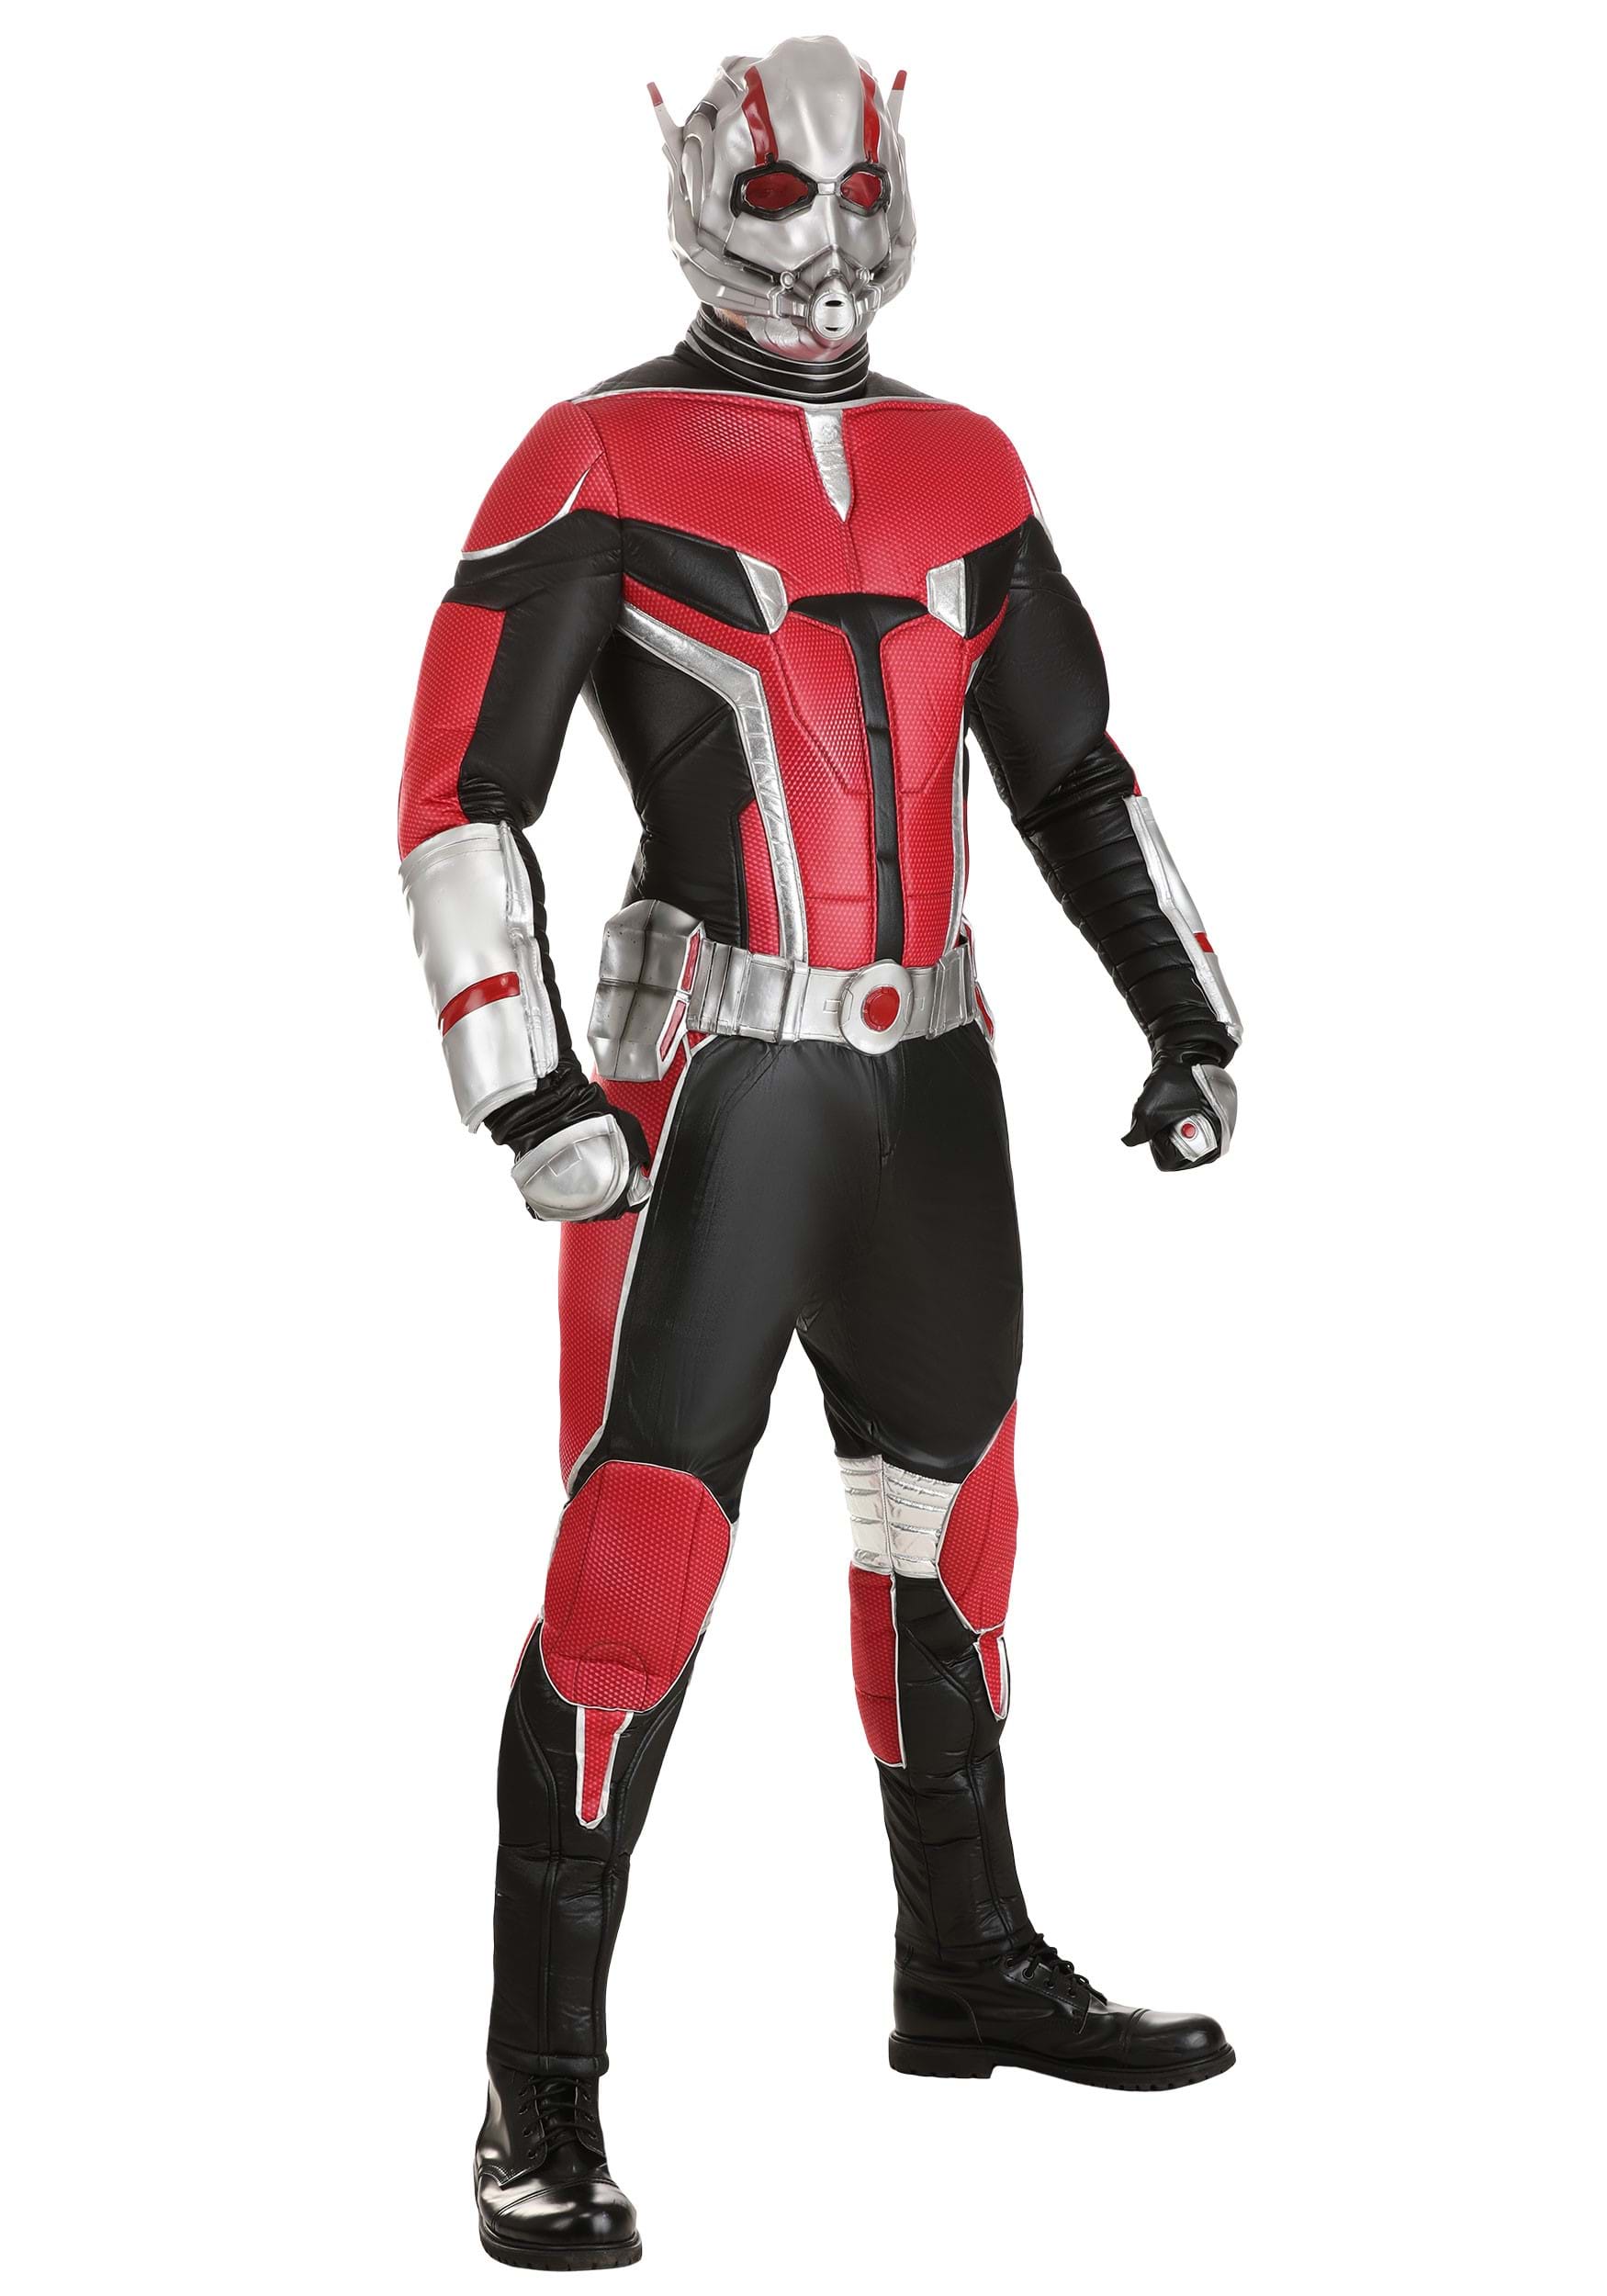 17.) Ant-Man Movie Quality Adult Costume